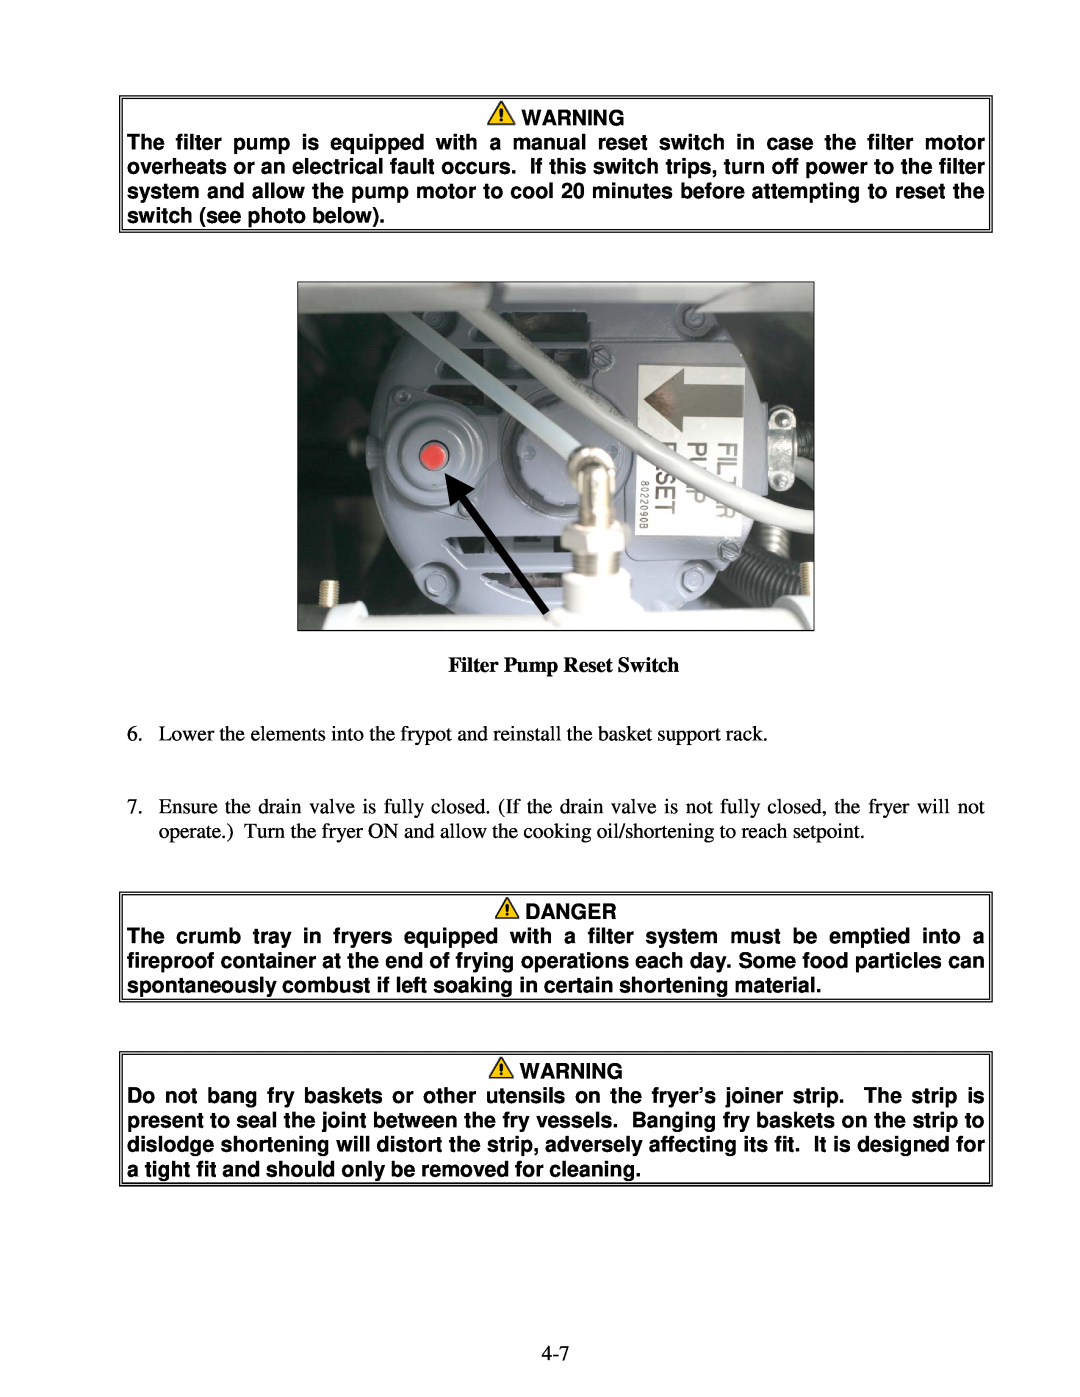 Frymaster 8195915 operation manual Filter Pump Reset Switch, Danger 